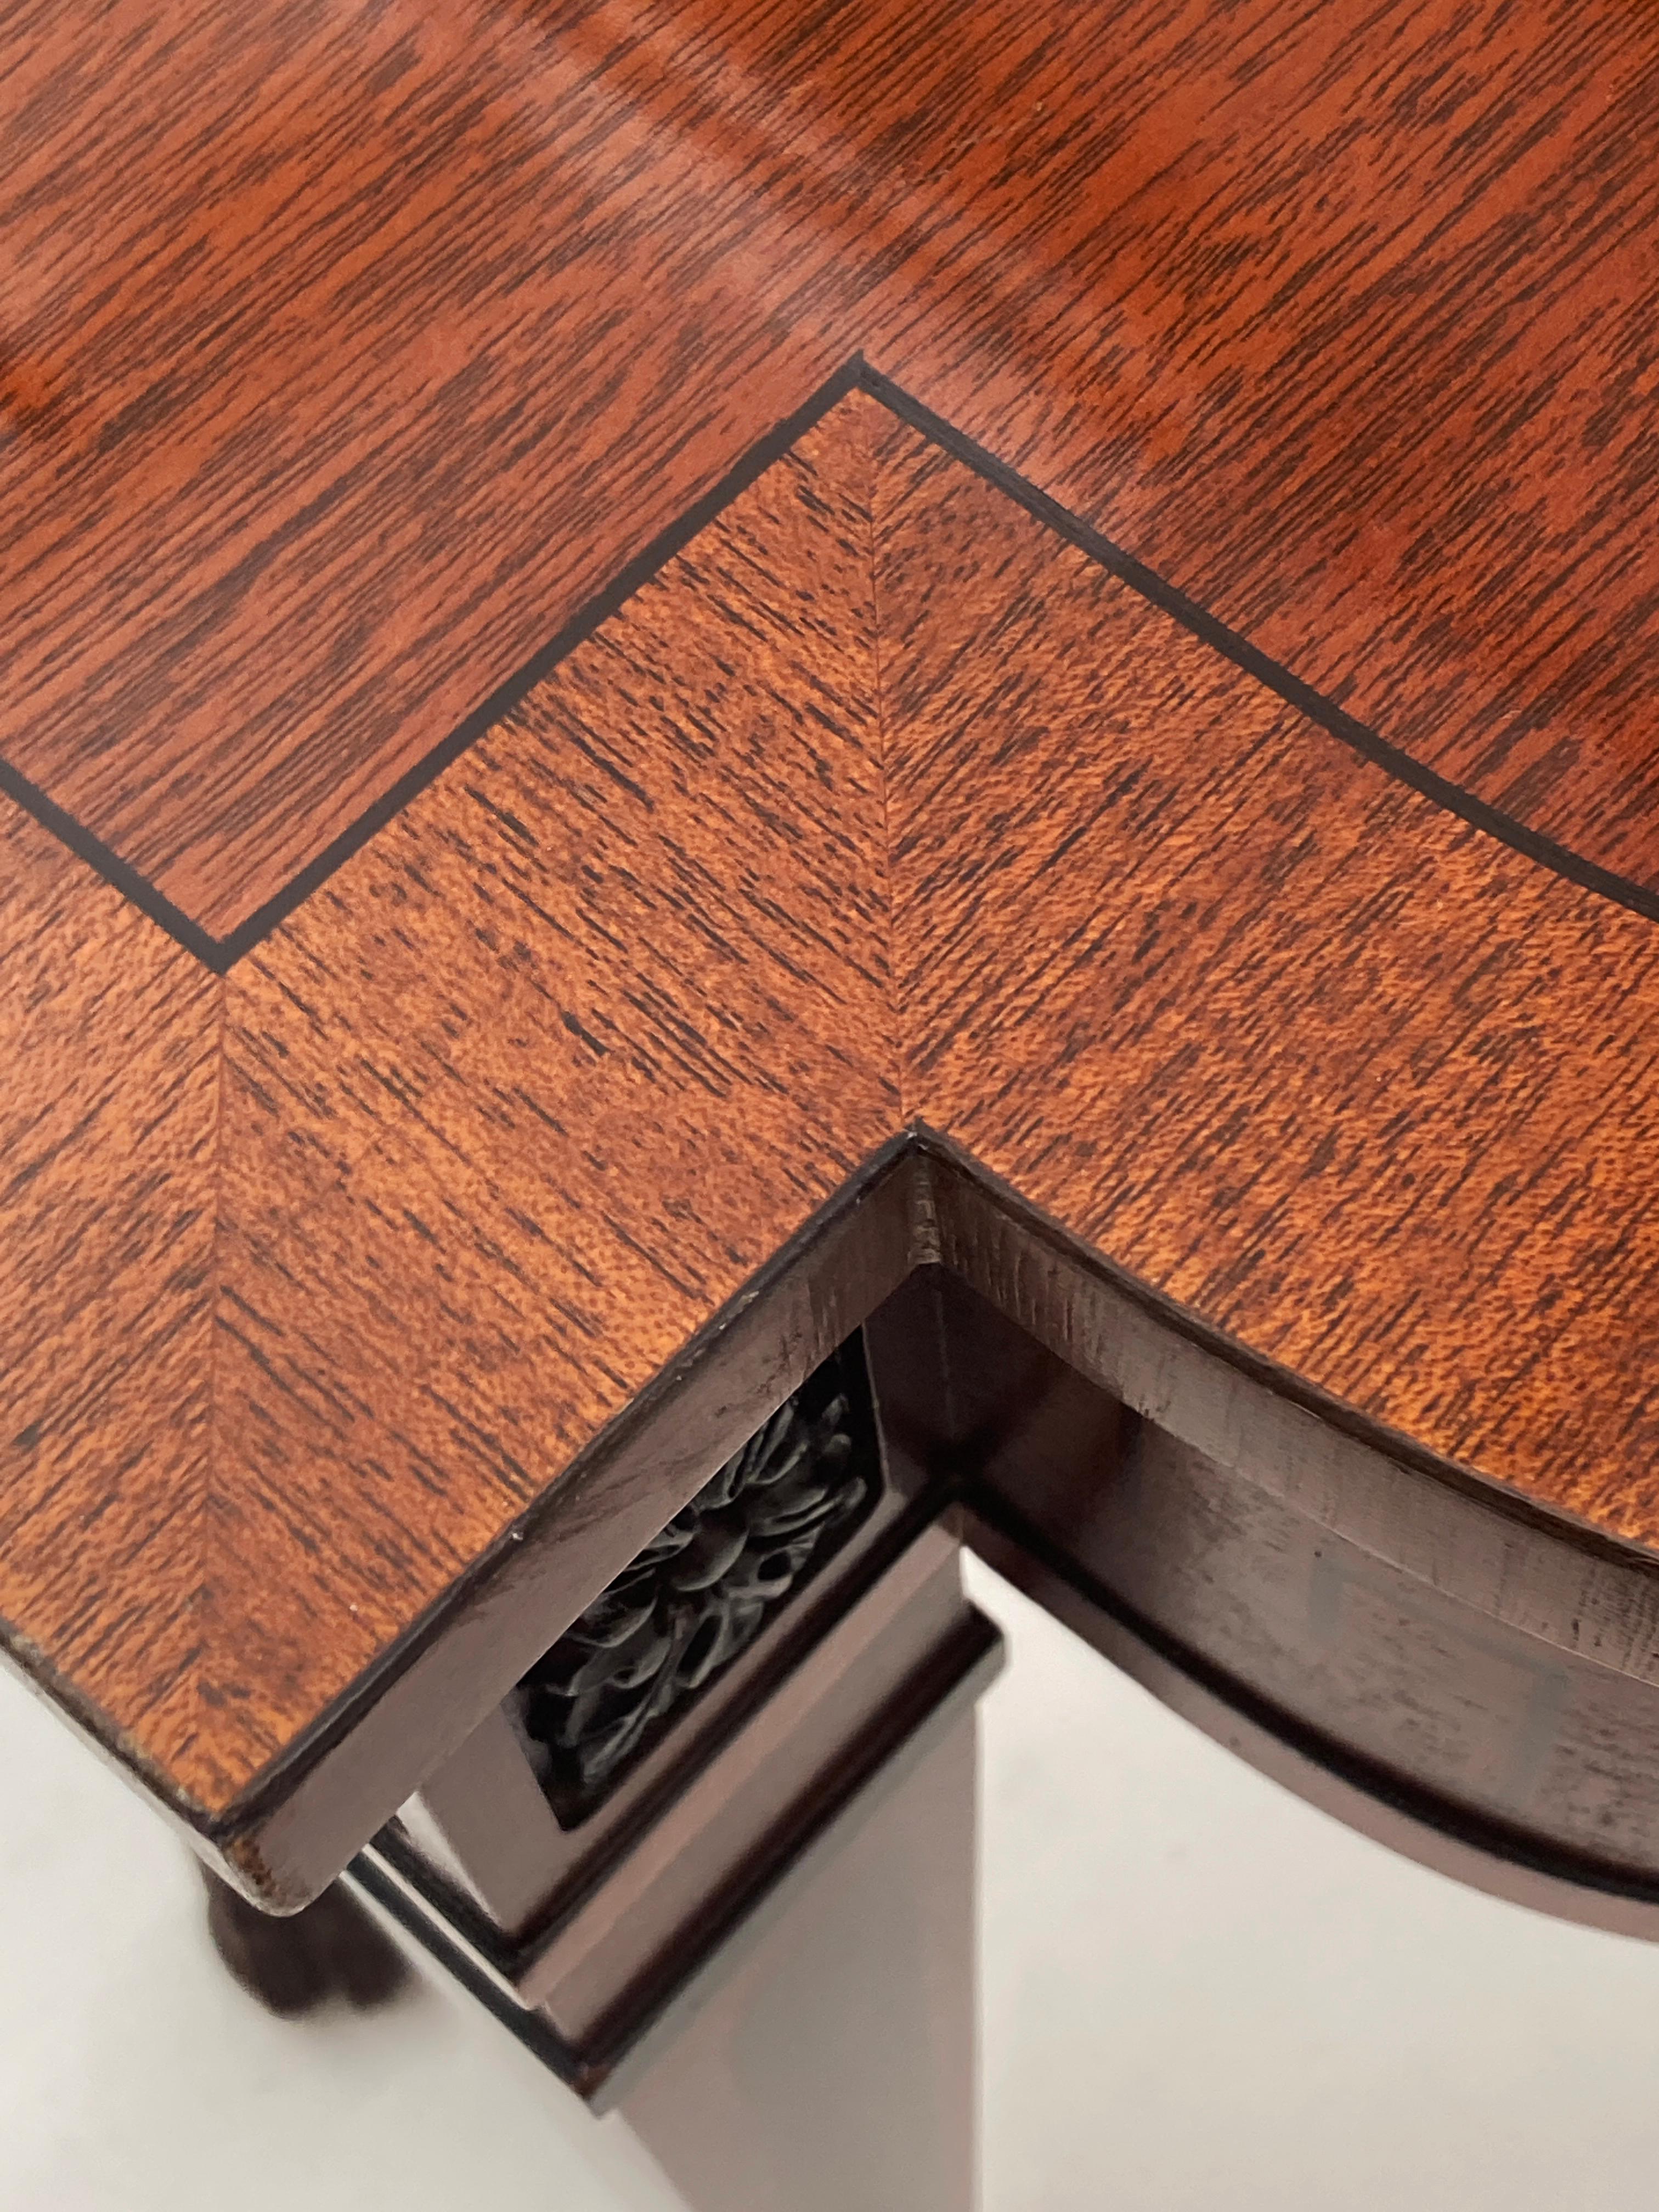 Baker Furniture Regency Mahogany Console Table with Ebonized Greek Key Inlay  8